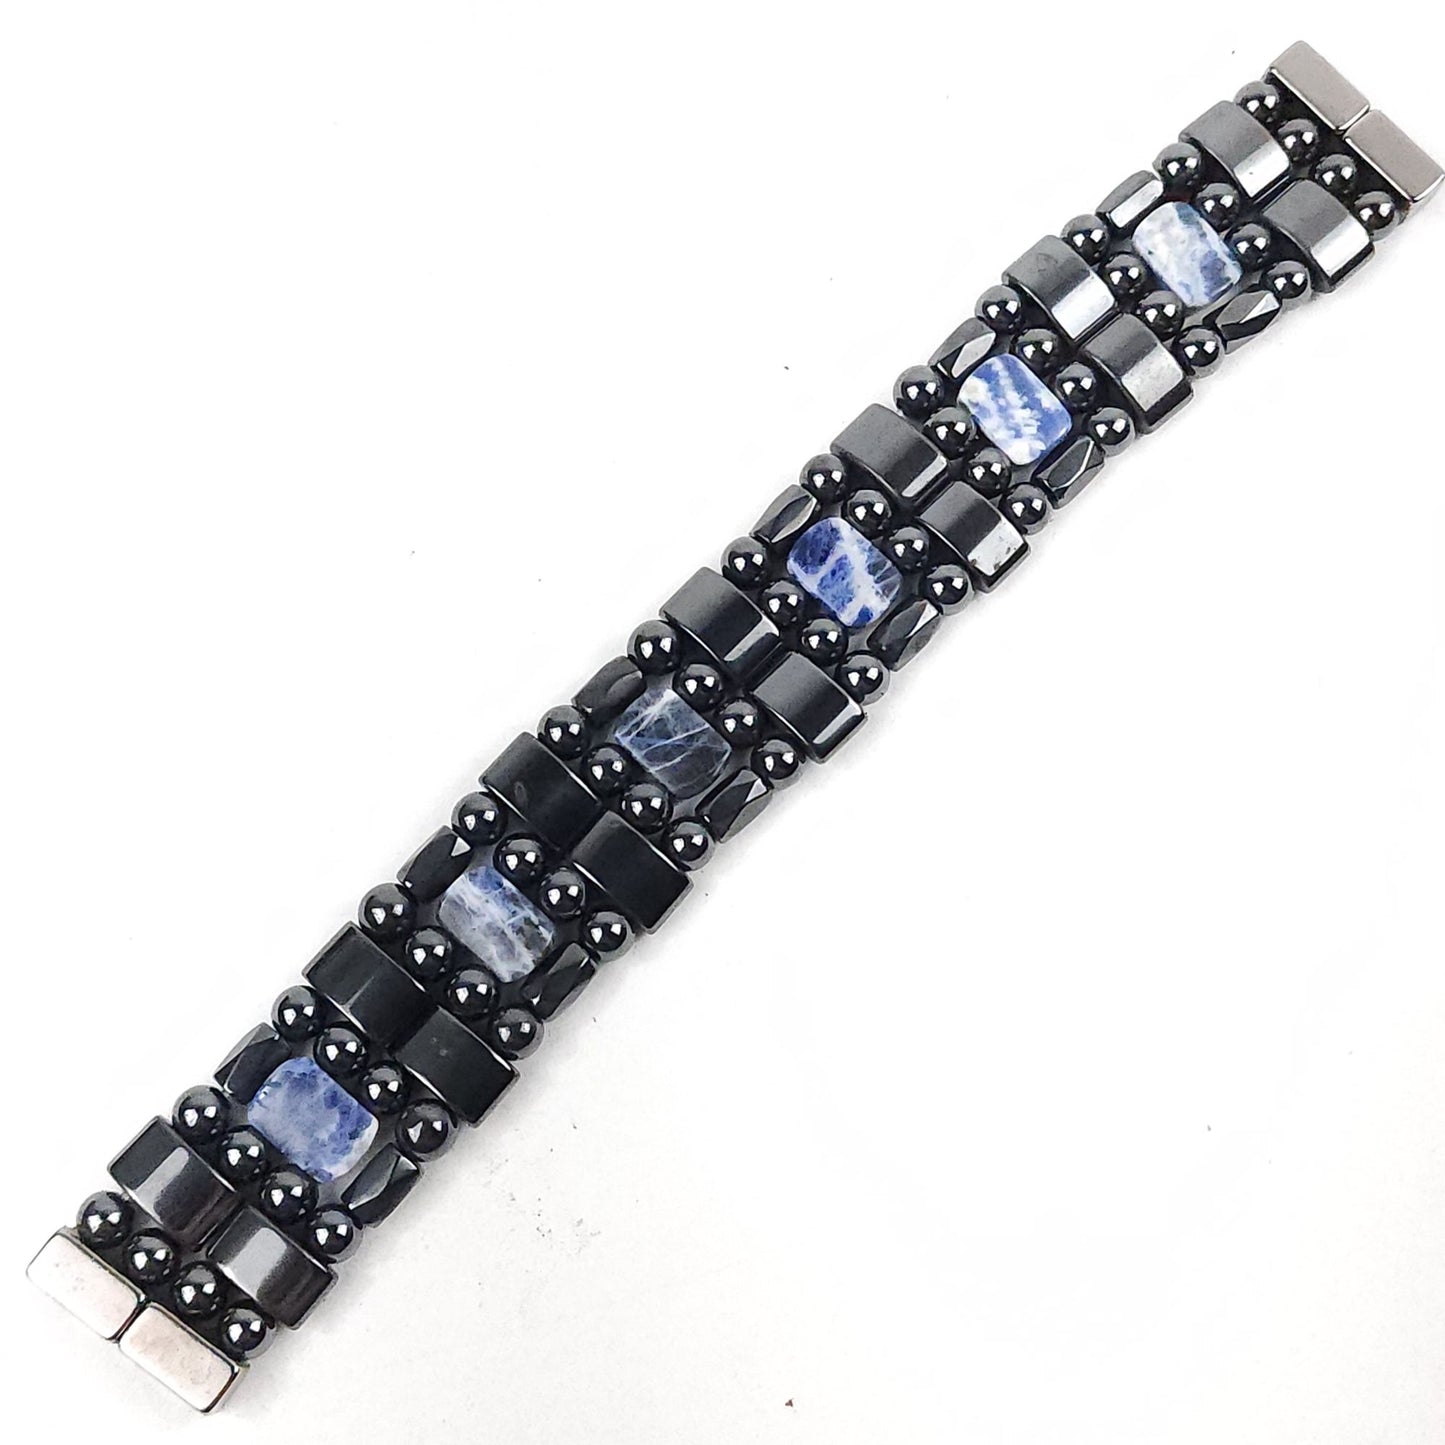 Black & Blue Sodalite Natural Stone Magnetic Bracelet Therapeutic Quad